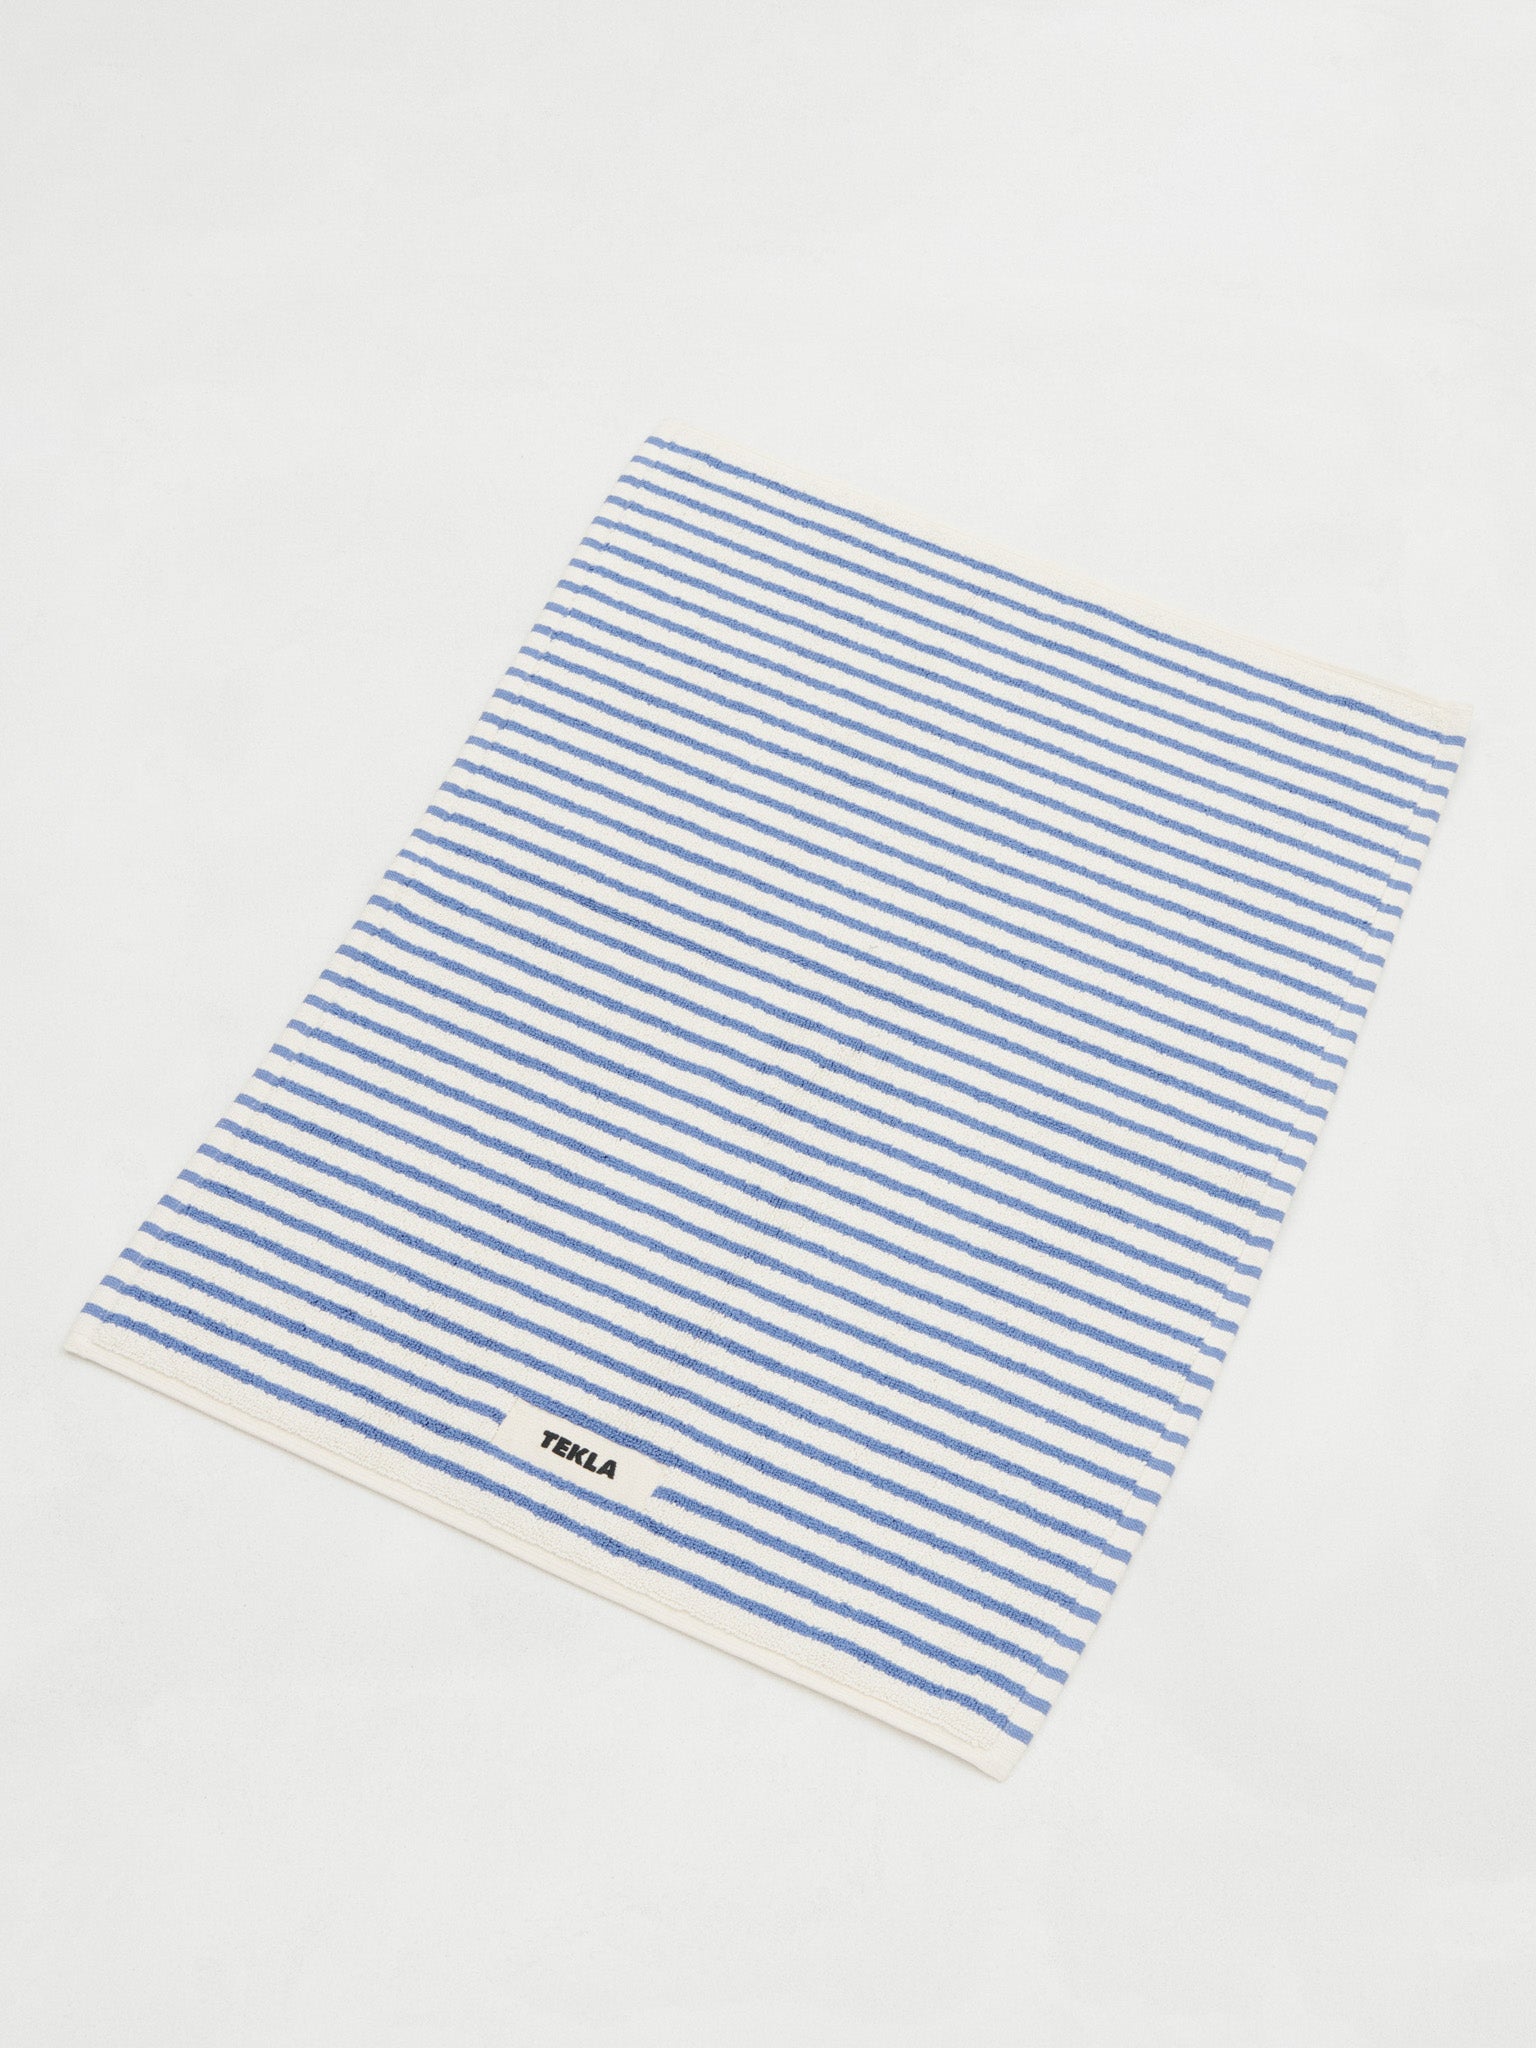 Tekla - Bath Mat in Coastal Blue Stripes